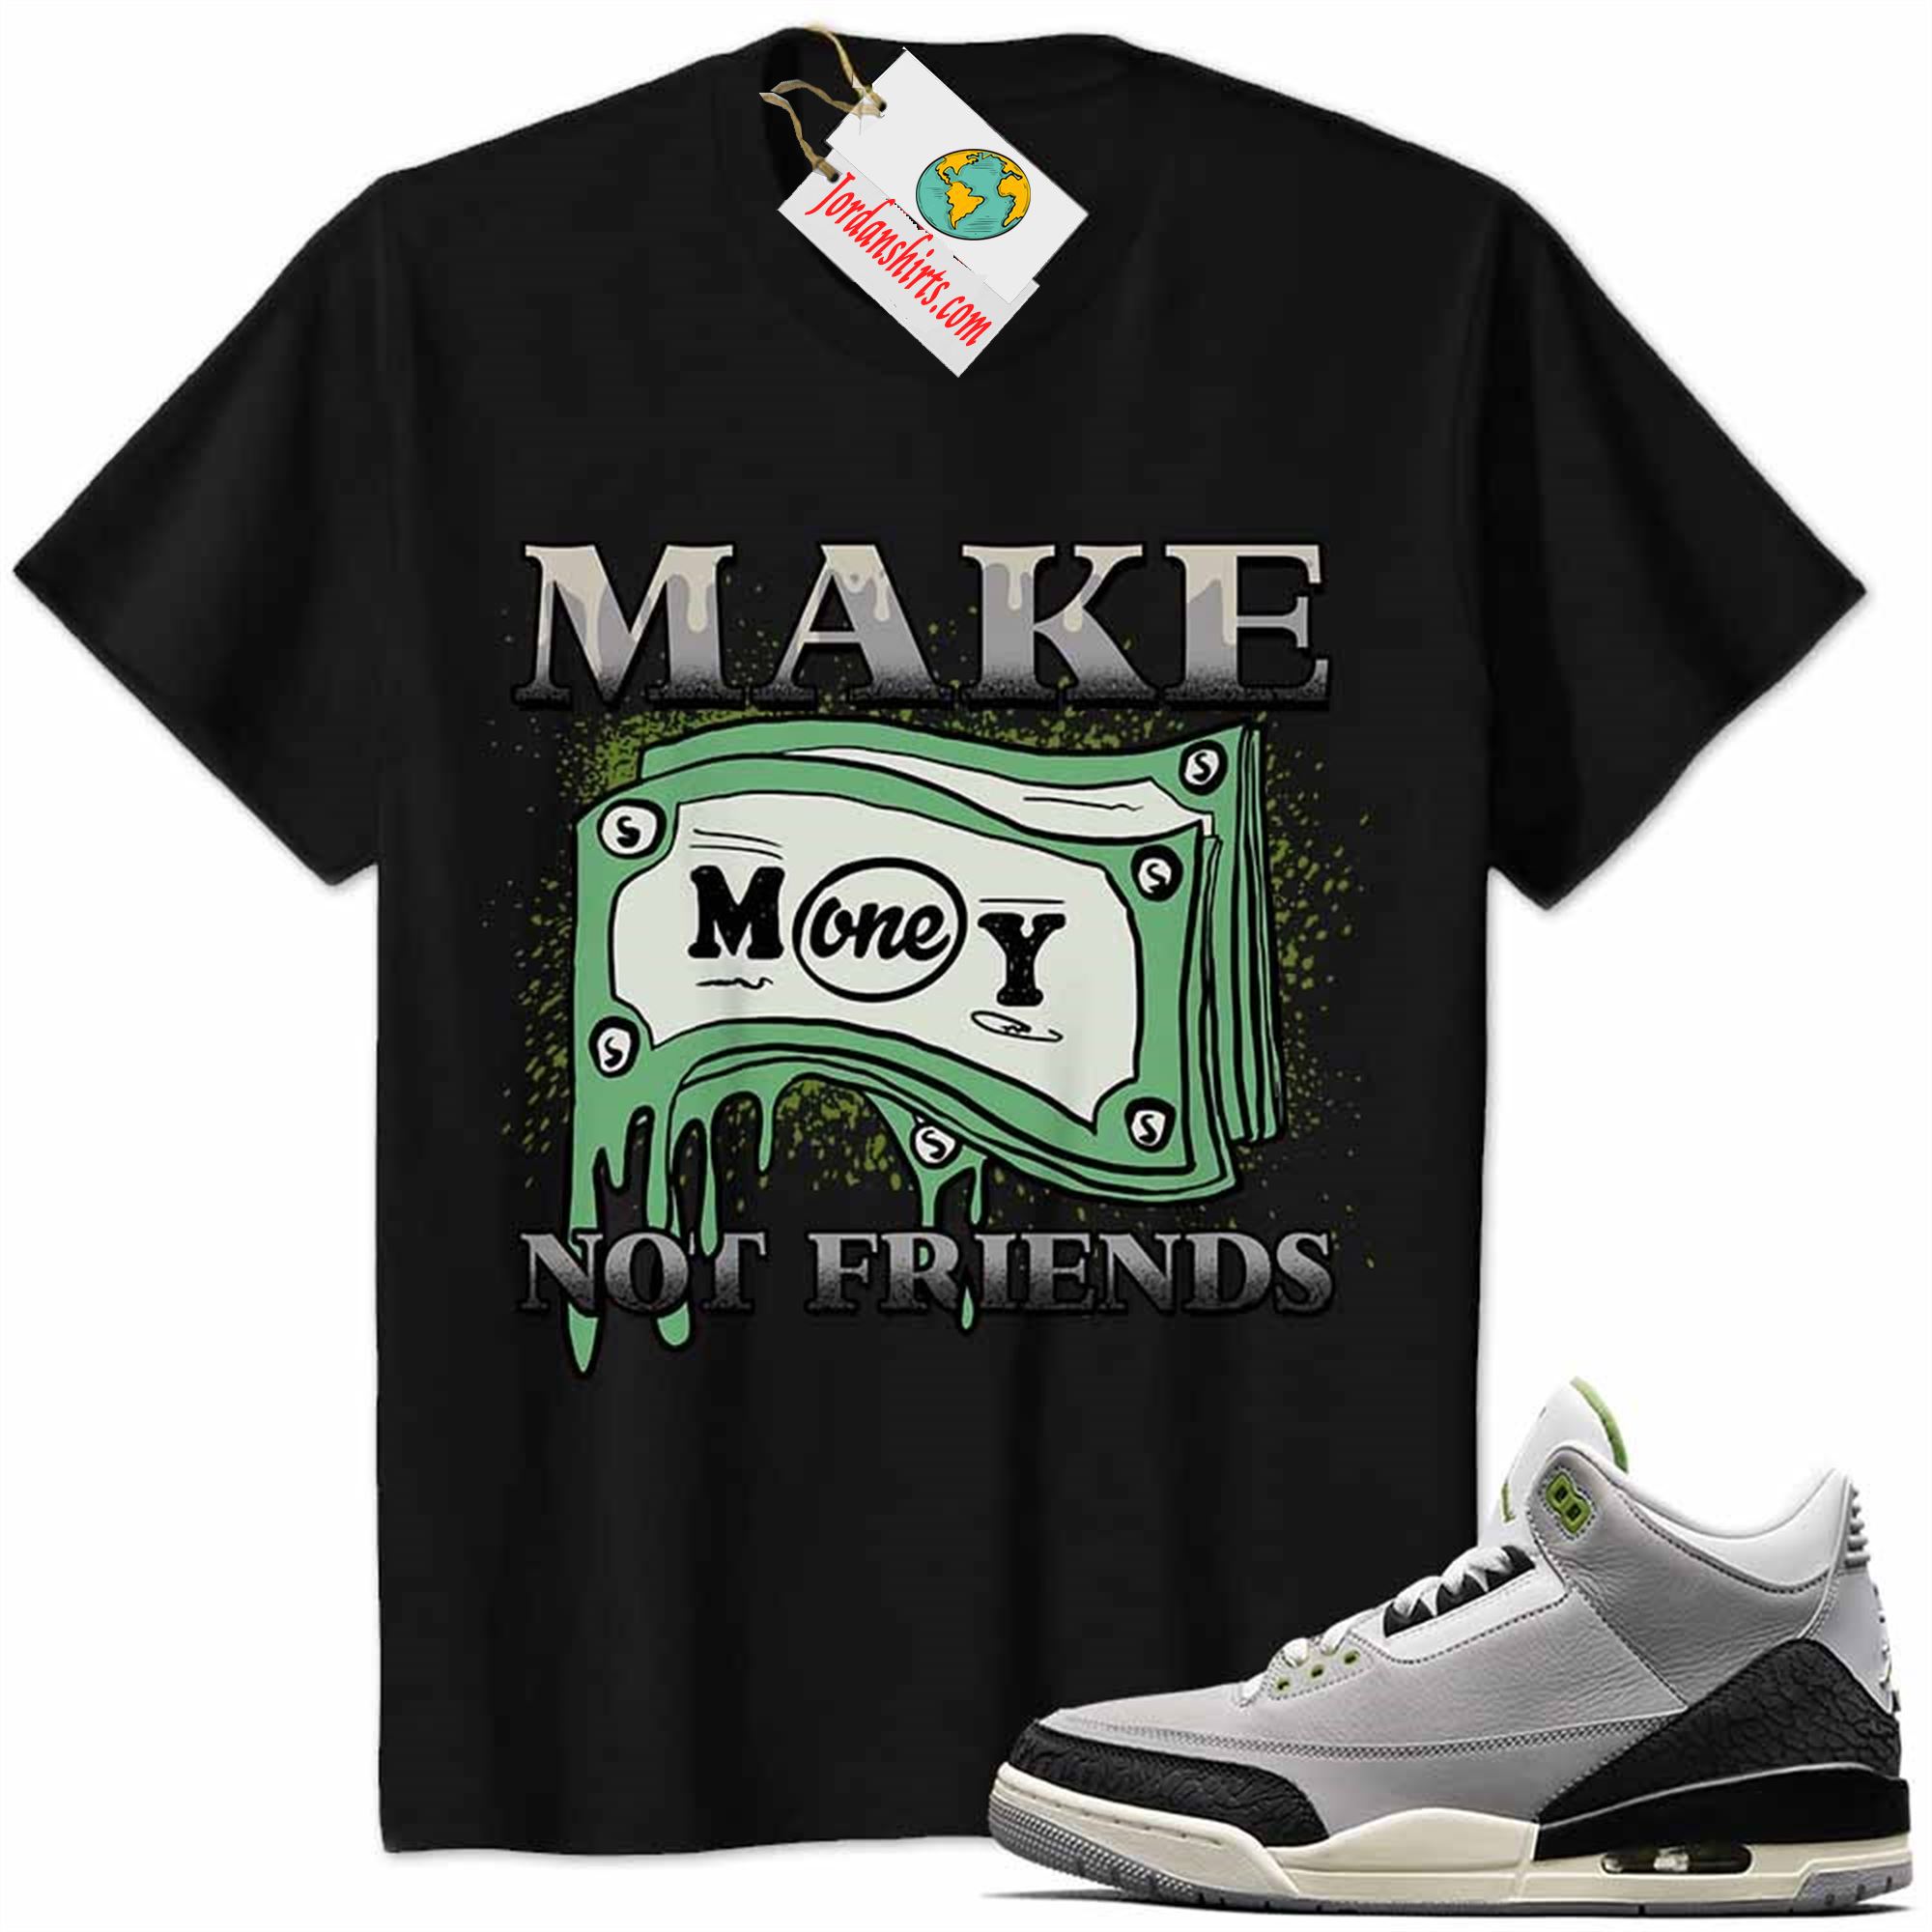 Jordan 3 Shirt, Jordan 3 Chlorophyll Shirt Make Money Graffiti Black Full Size Up To 5xl